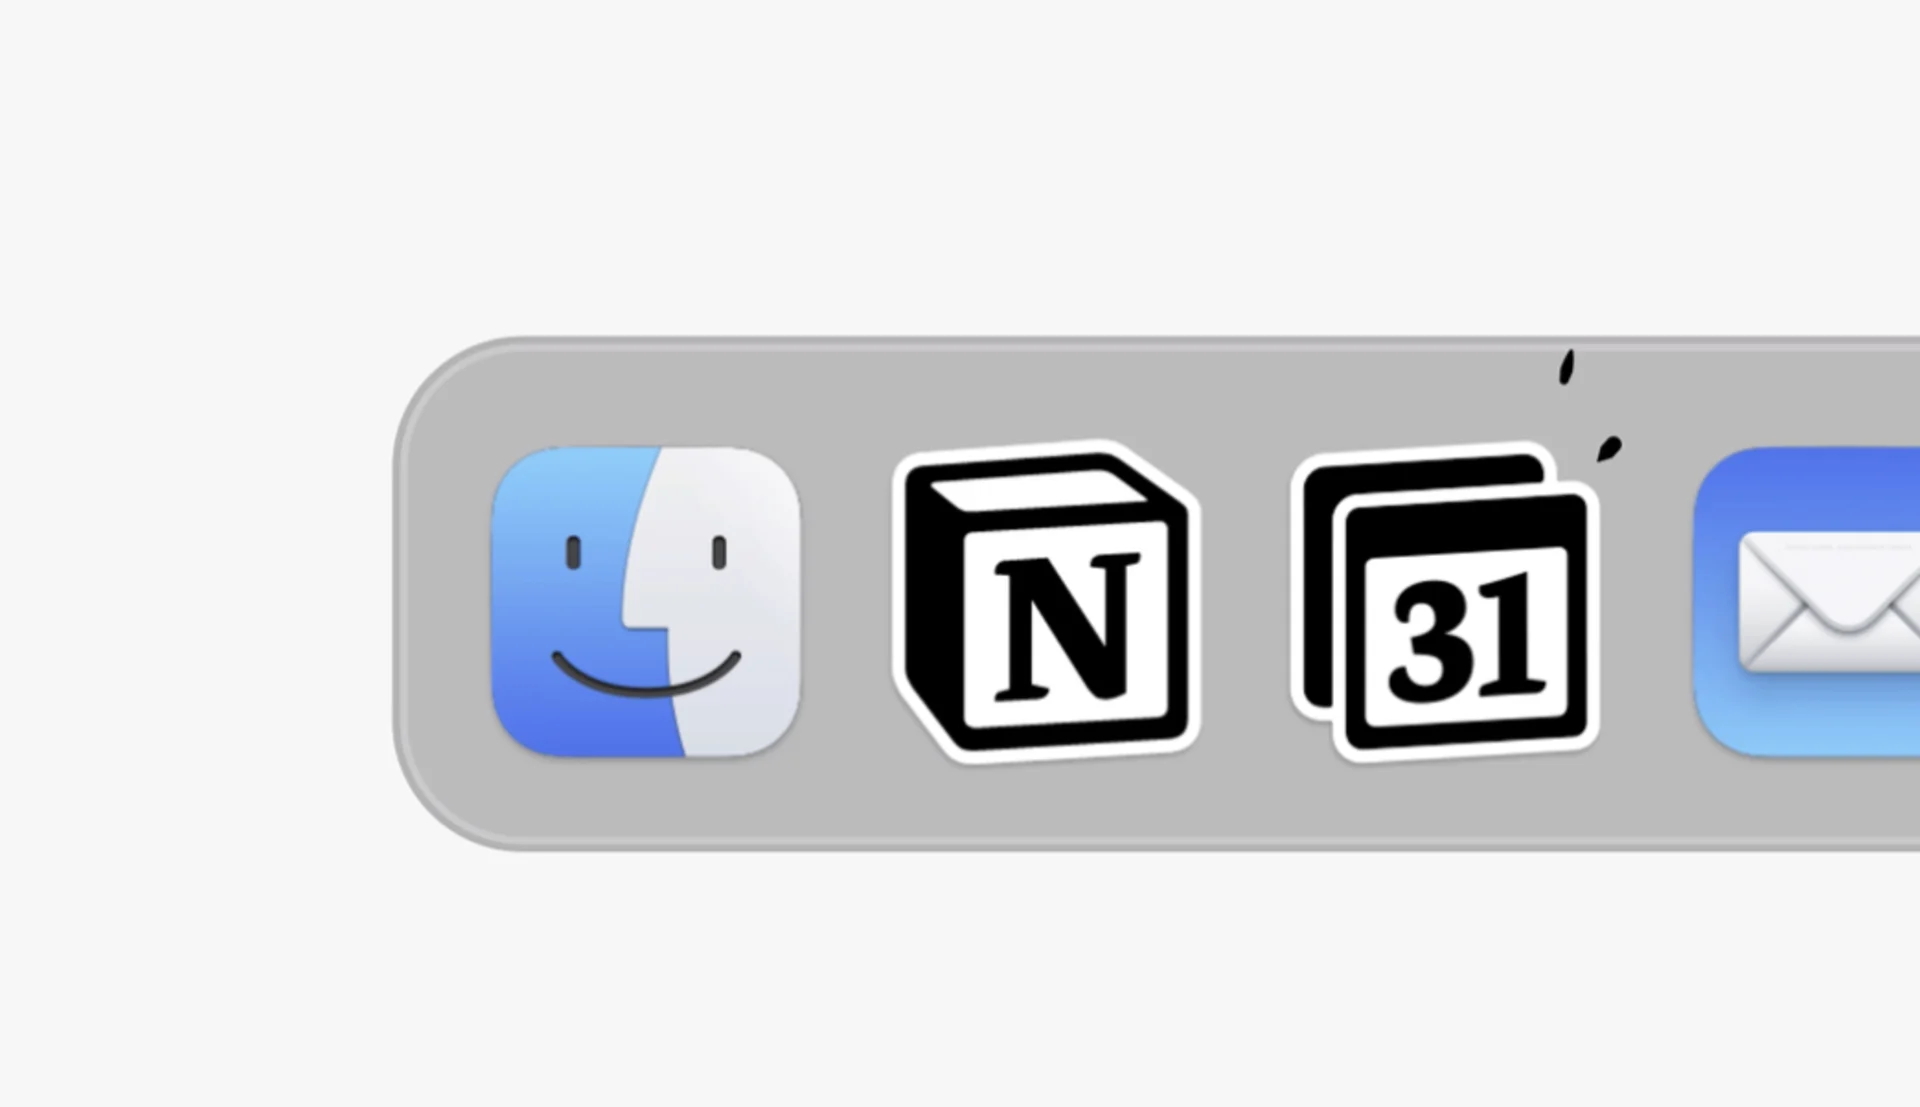 The new Notion calendar app, netx to Notion logo